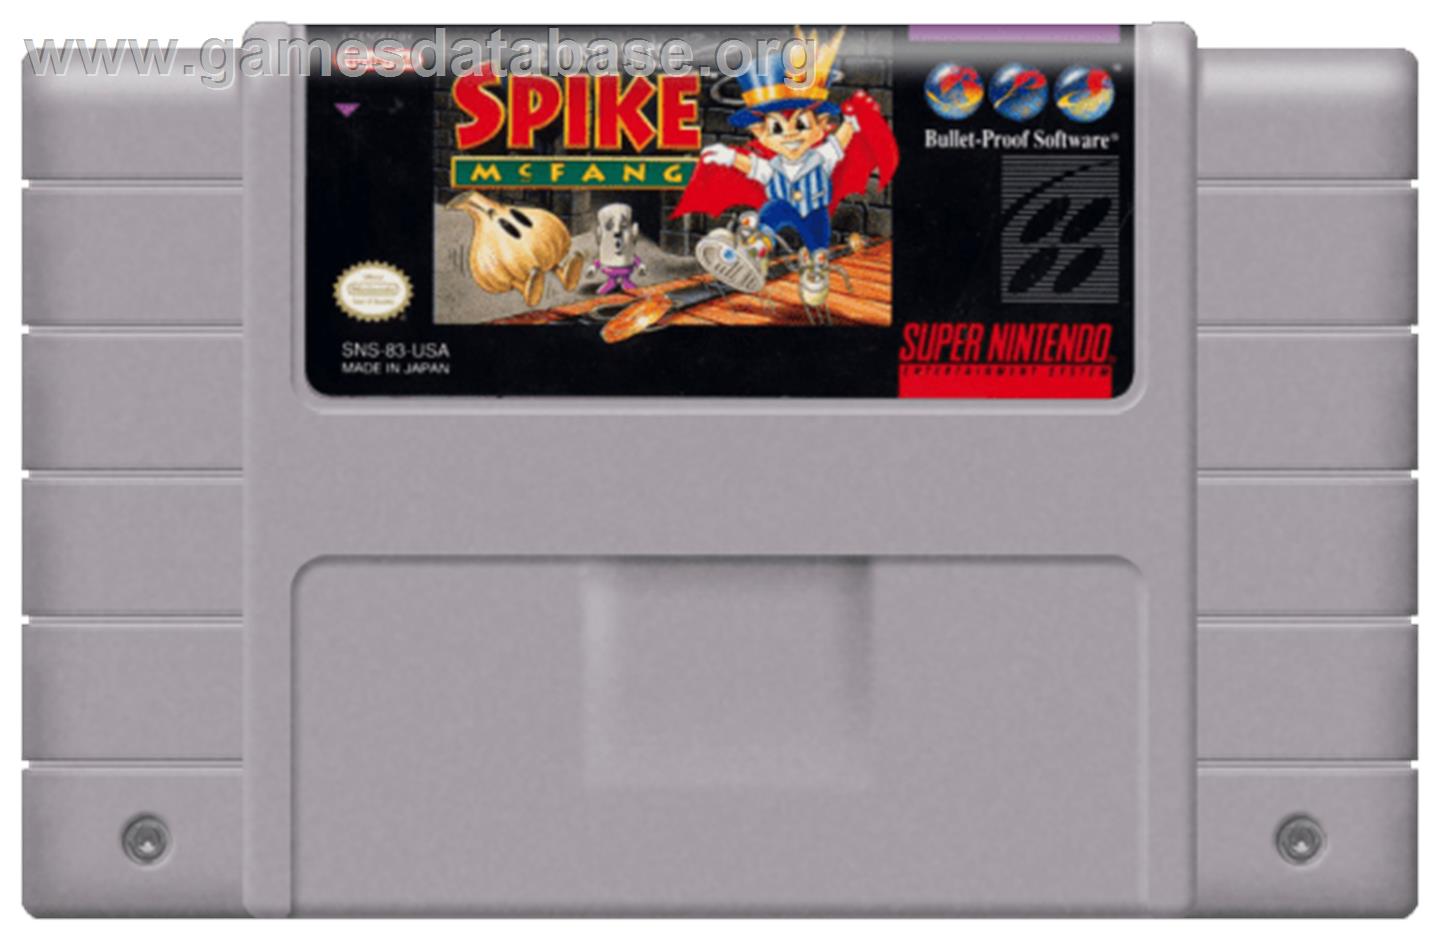 The Twisted Tales of Spike McFang - Nintendo SNES - Artwork - Cartridge